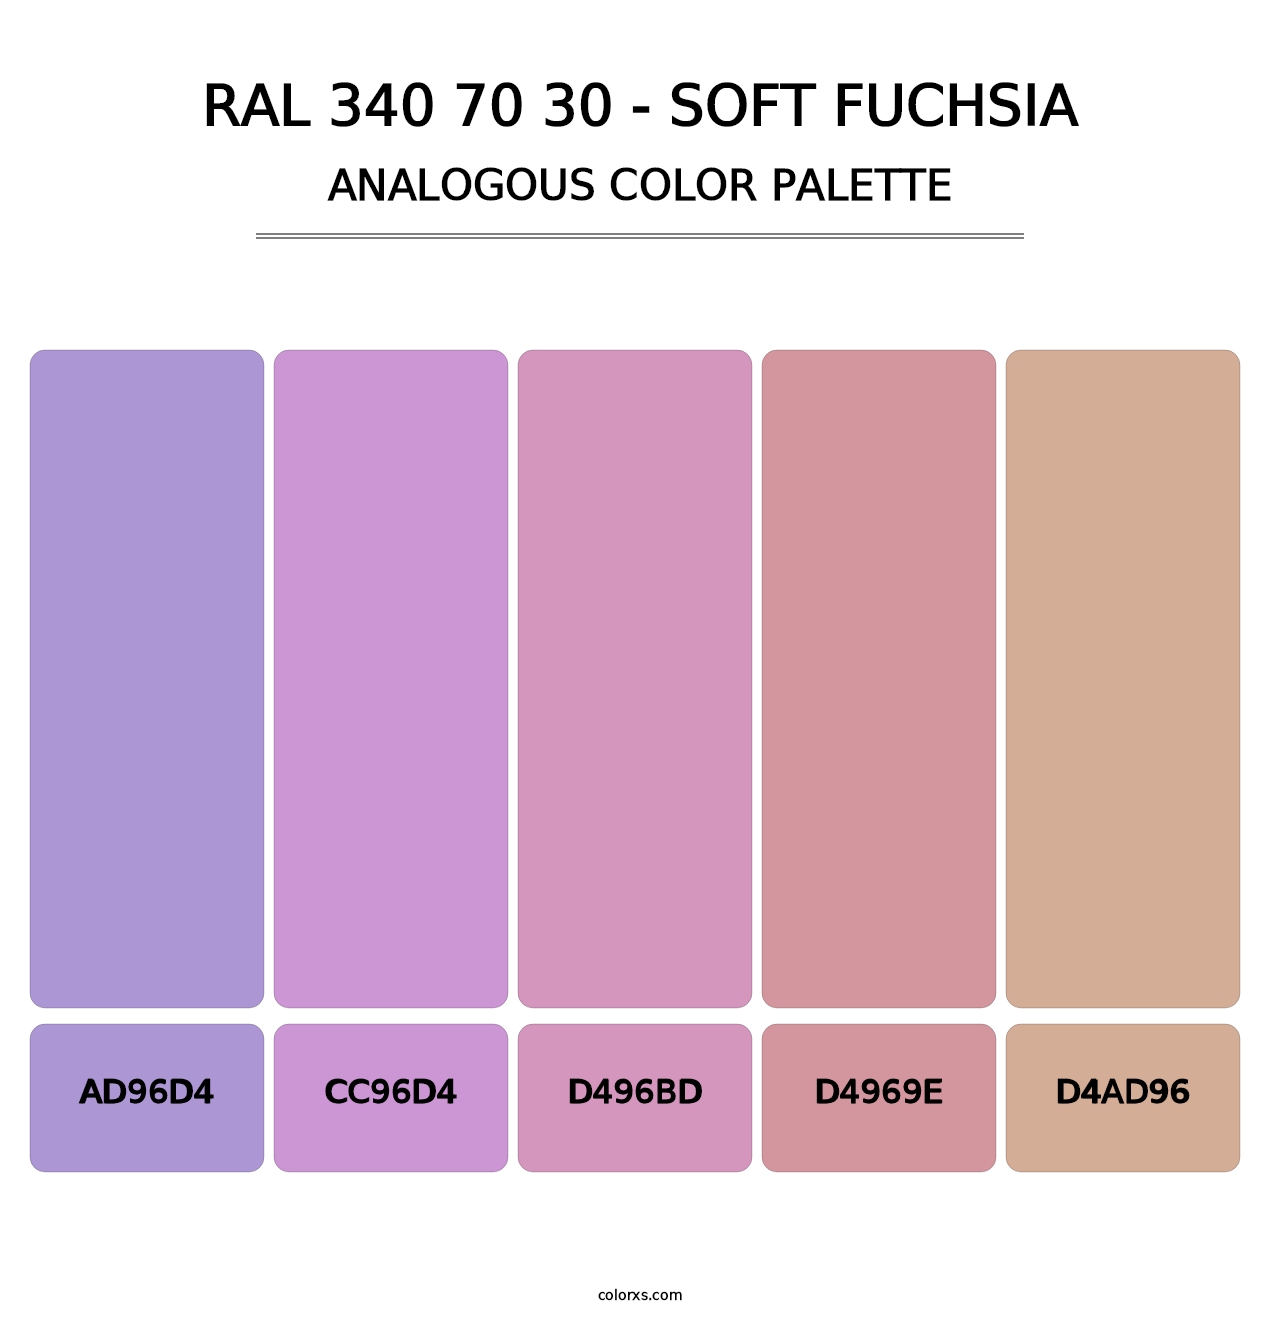 RAL 340 70 30 - Soft Fuchsia - Analogous Color Palette